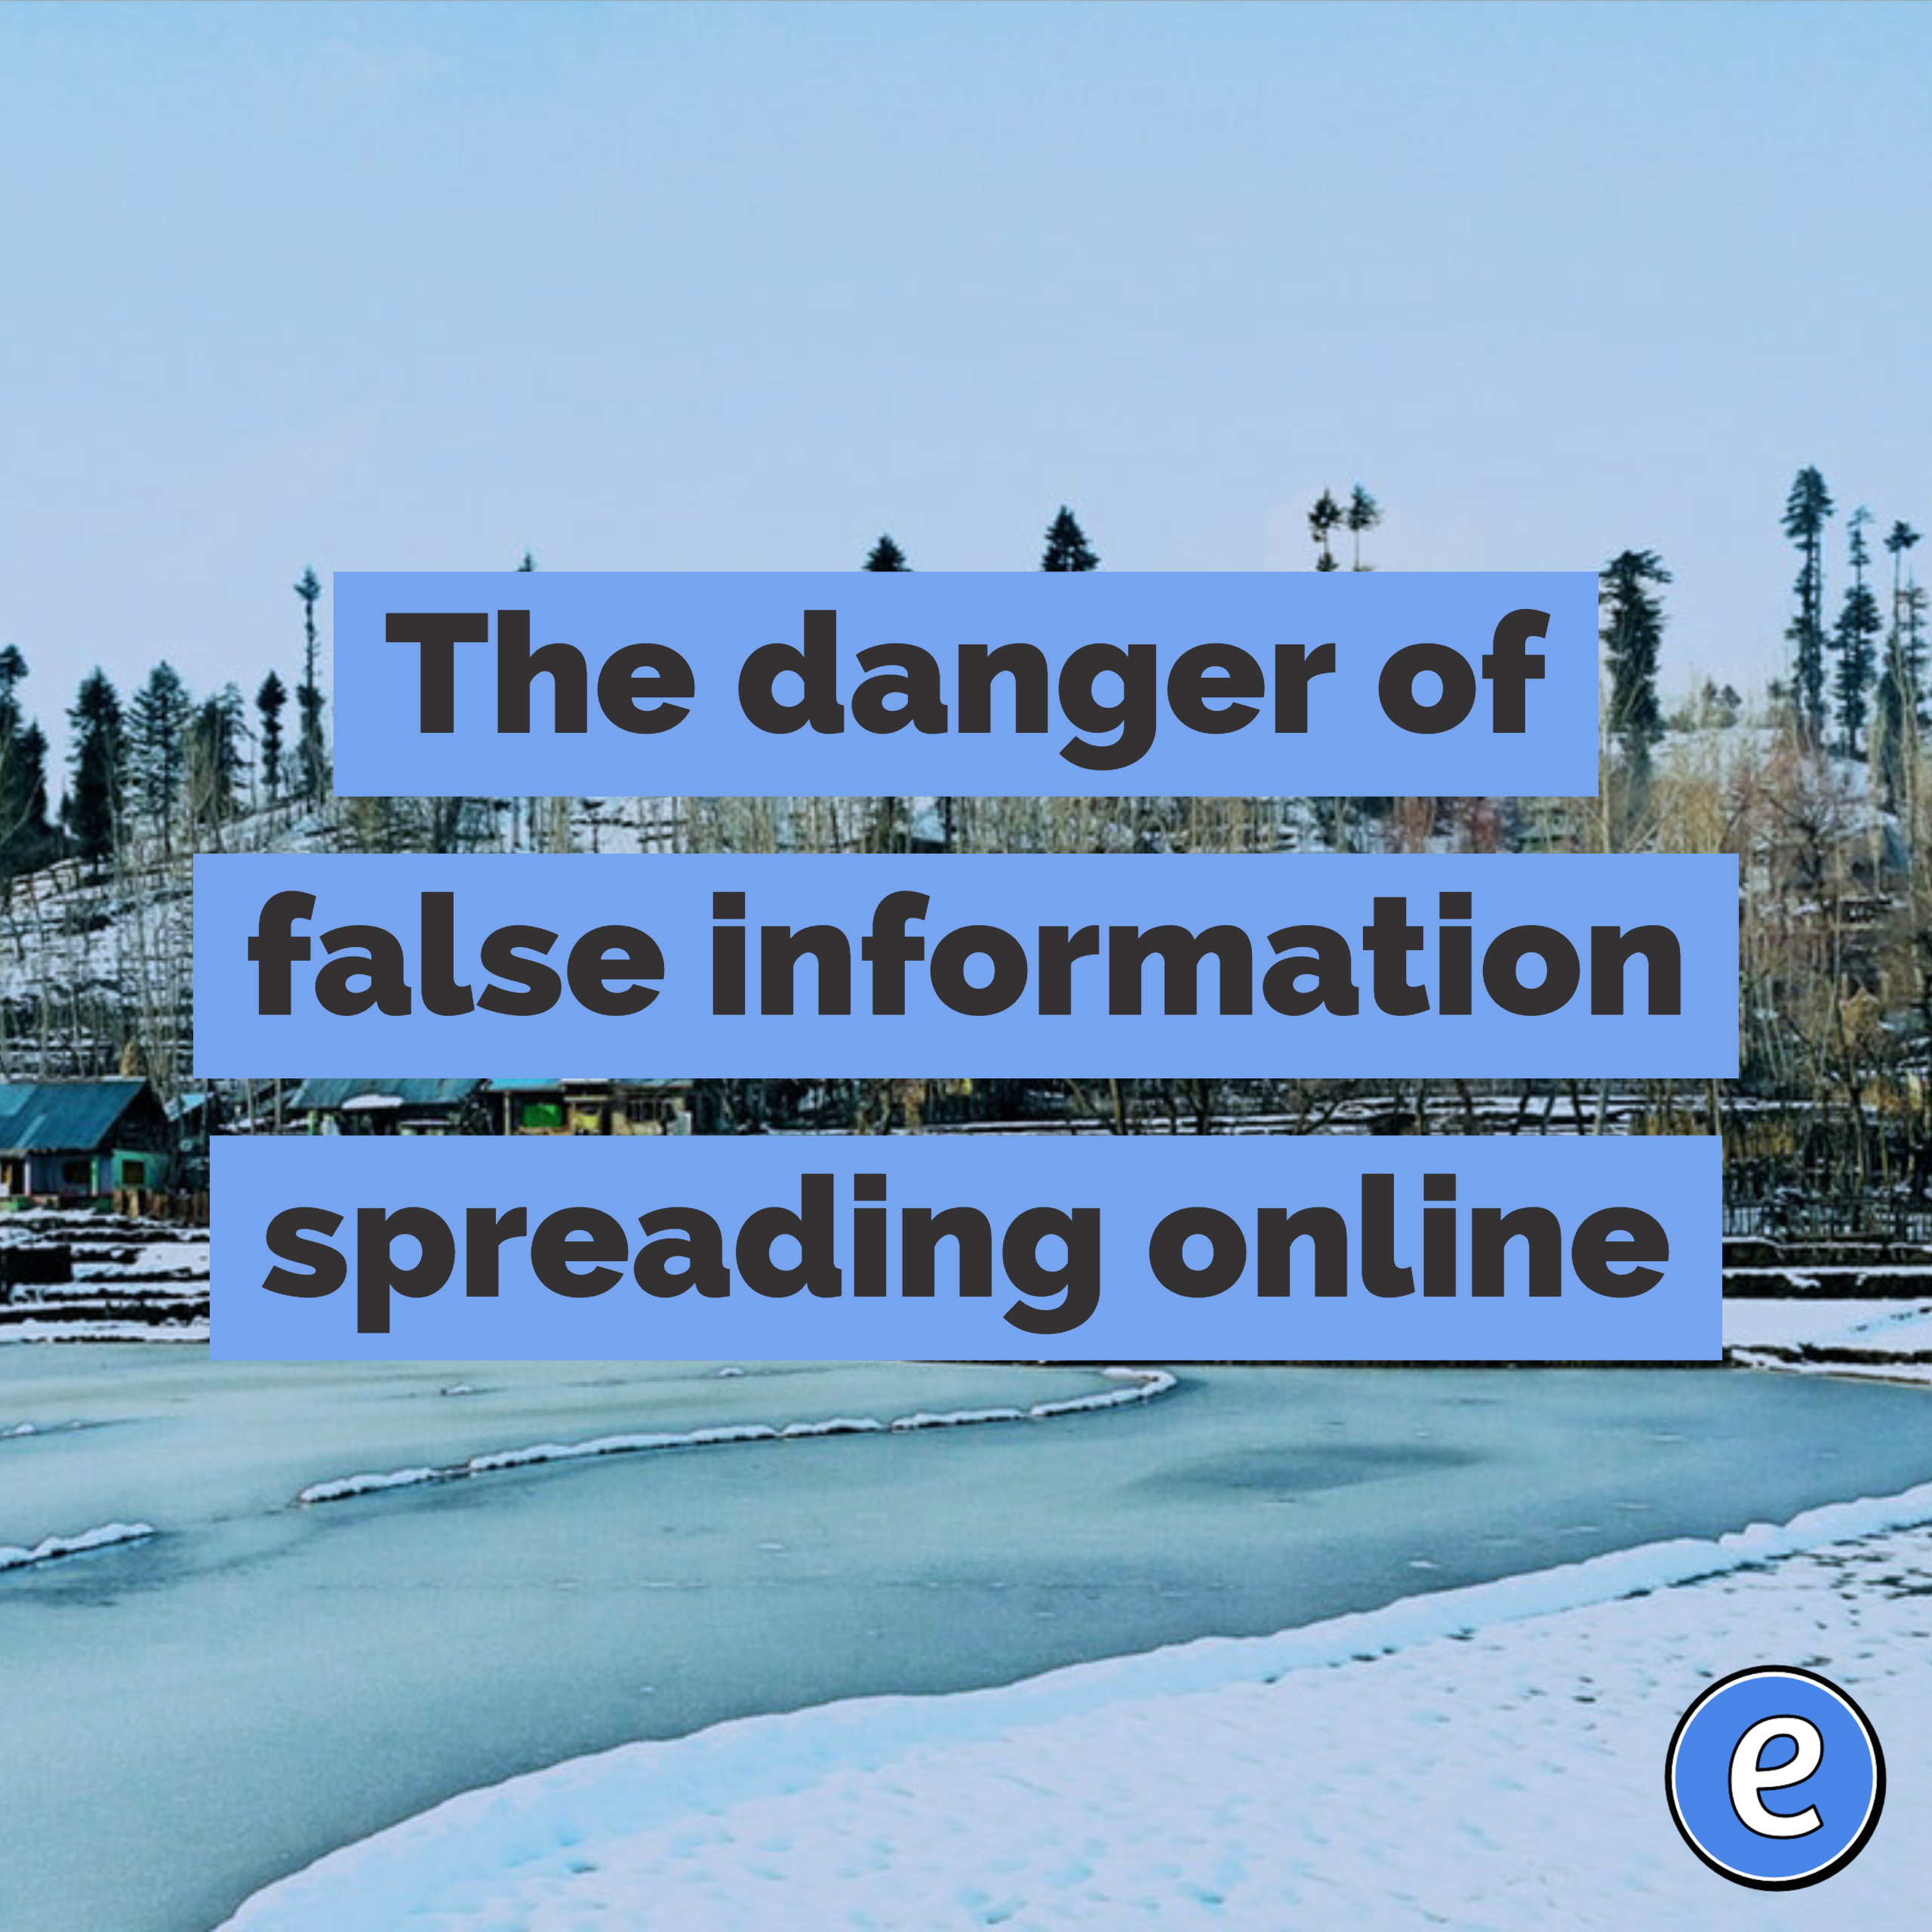 The danger of false information spreading online